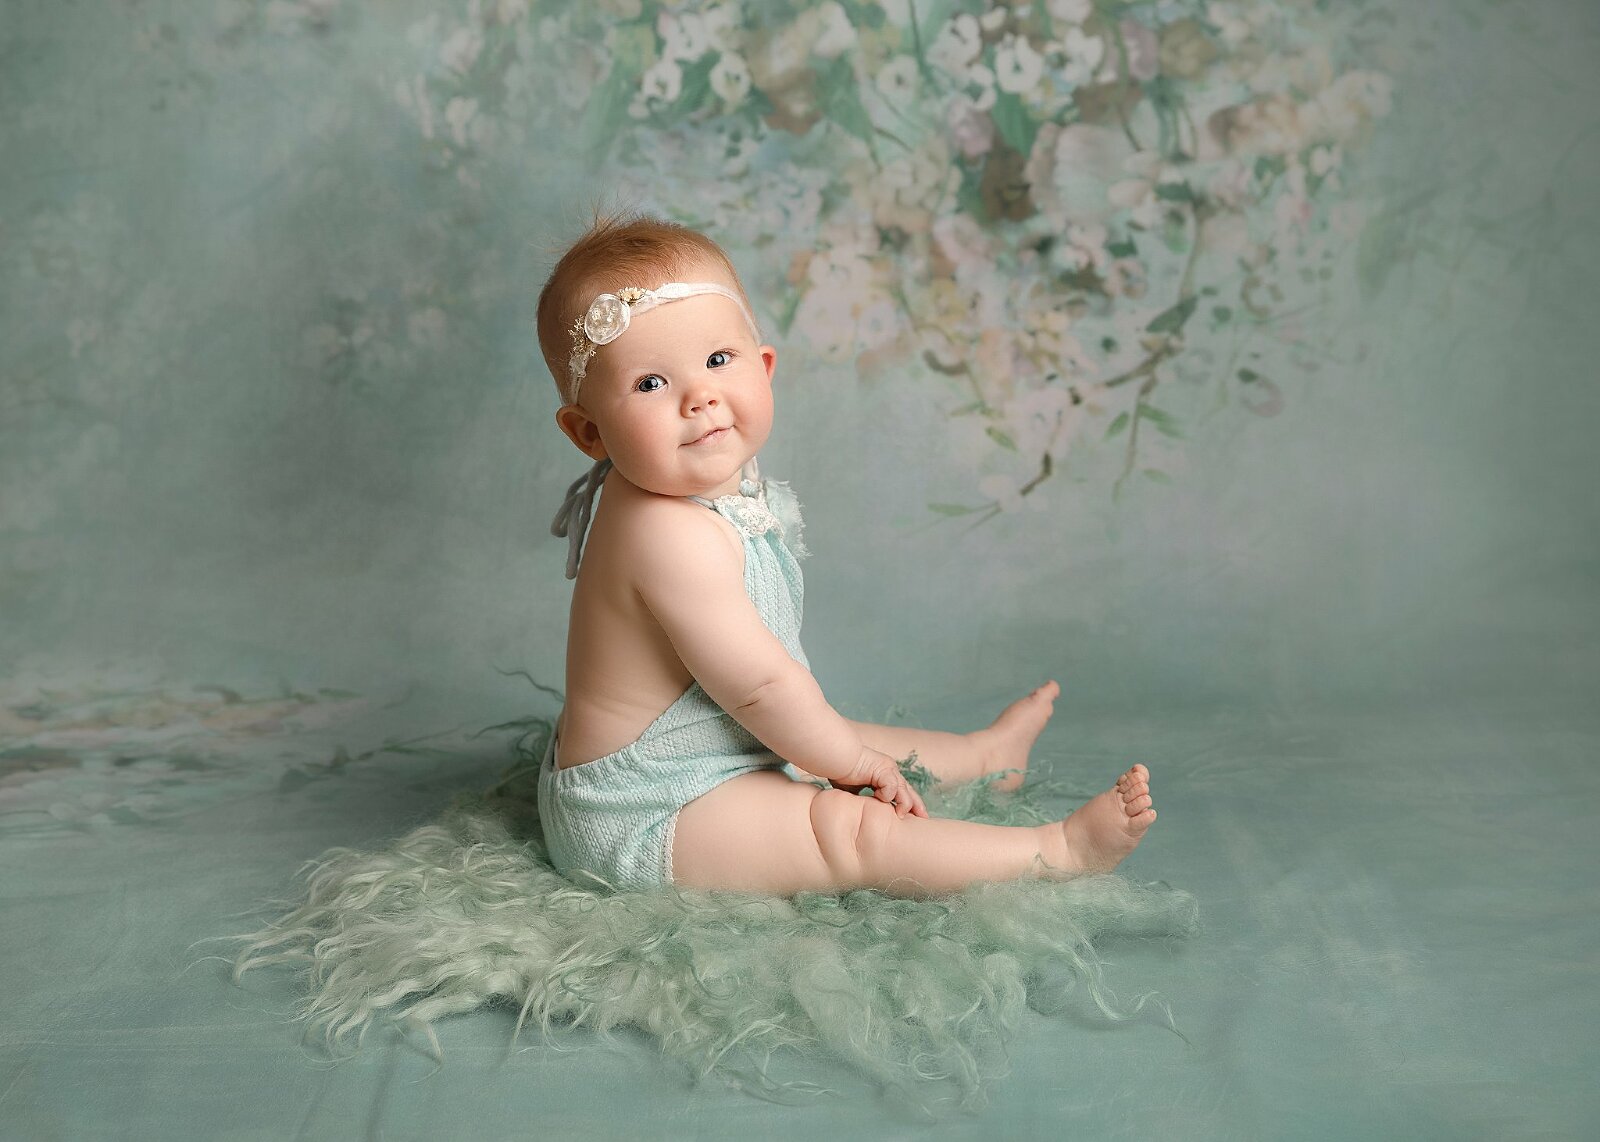 Baby girl sitter photo shoot in studio Hereford, Herefordshire